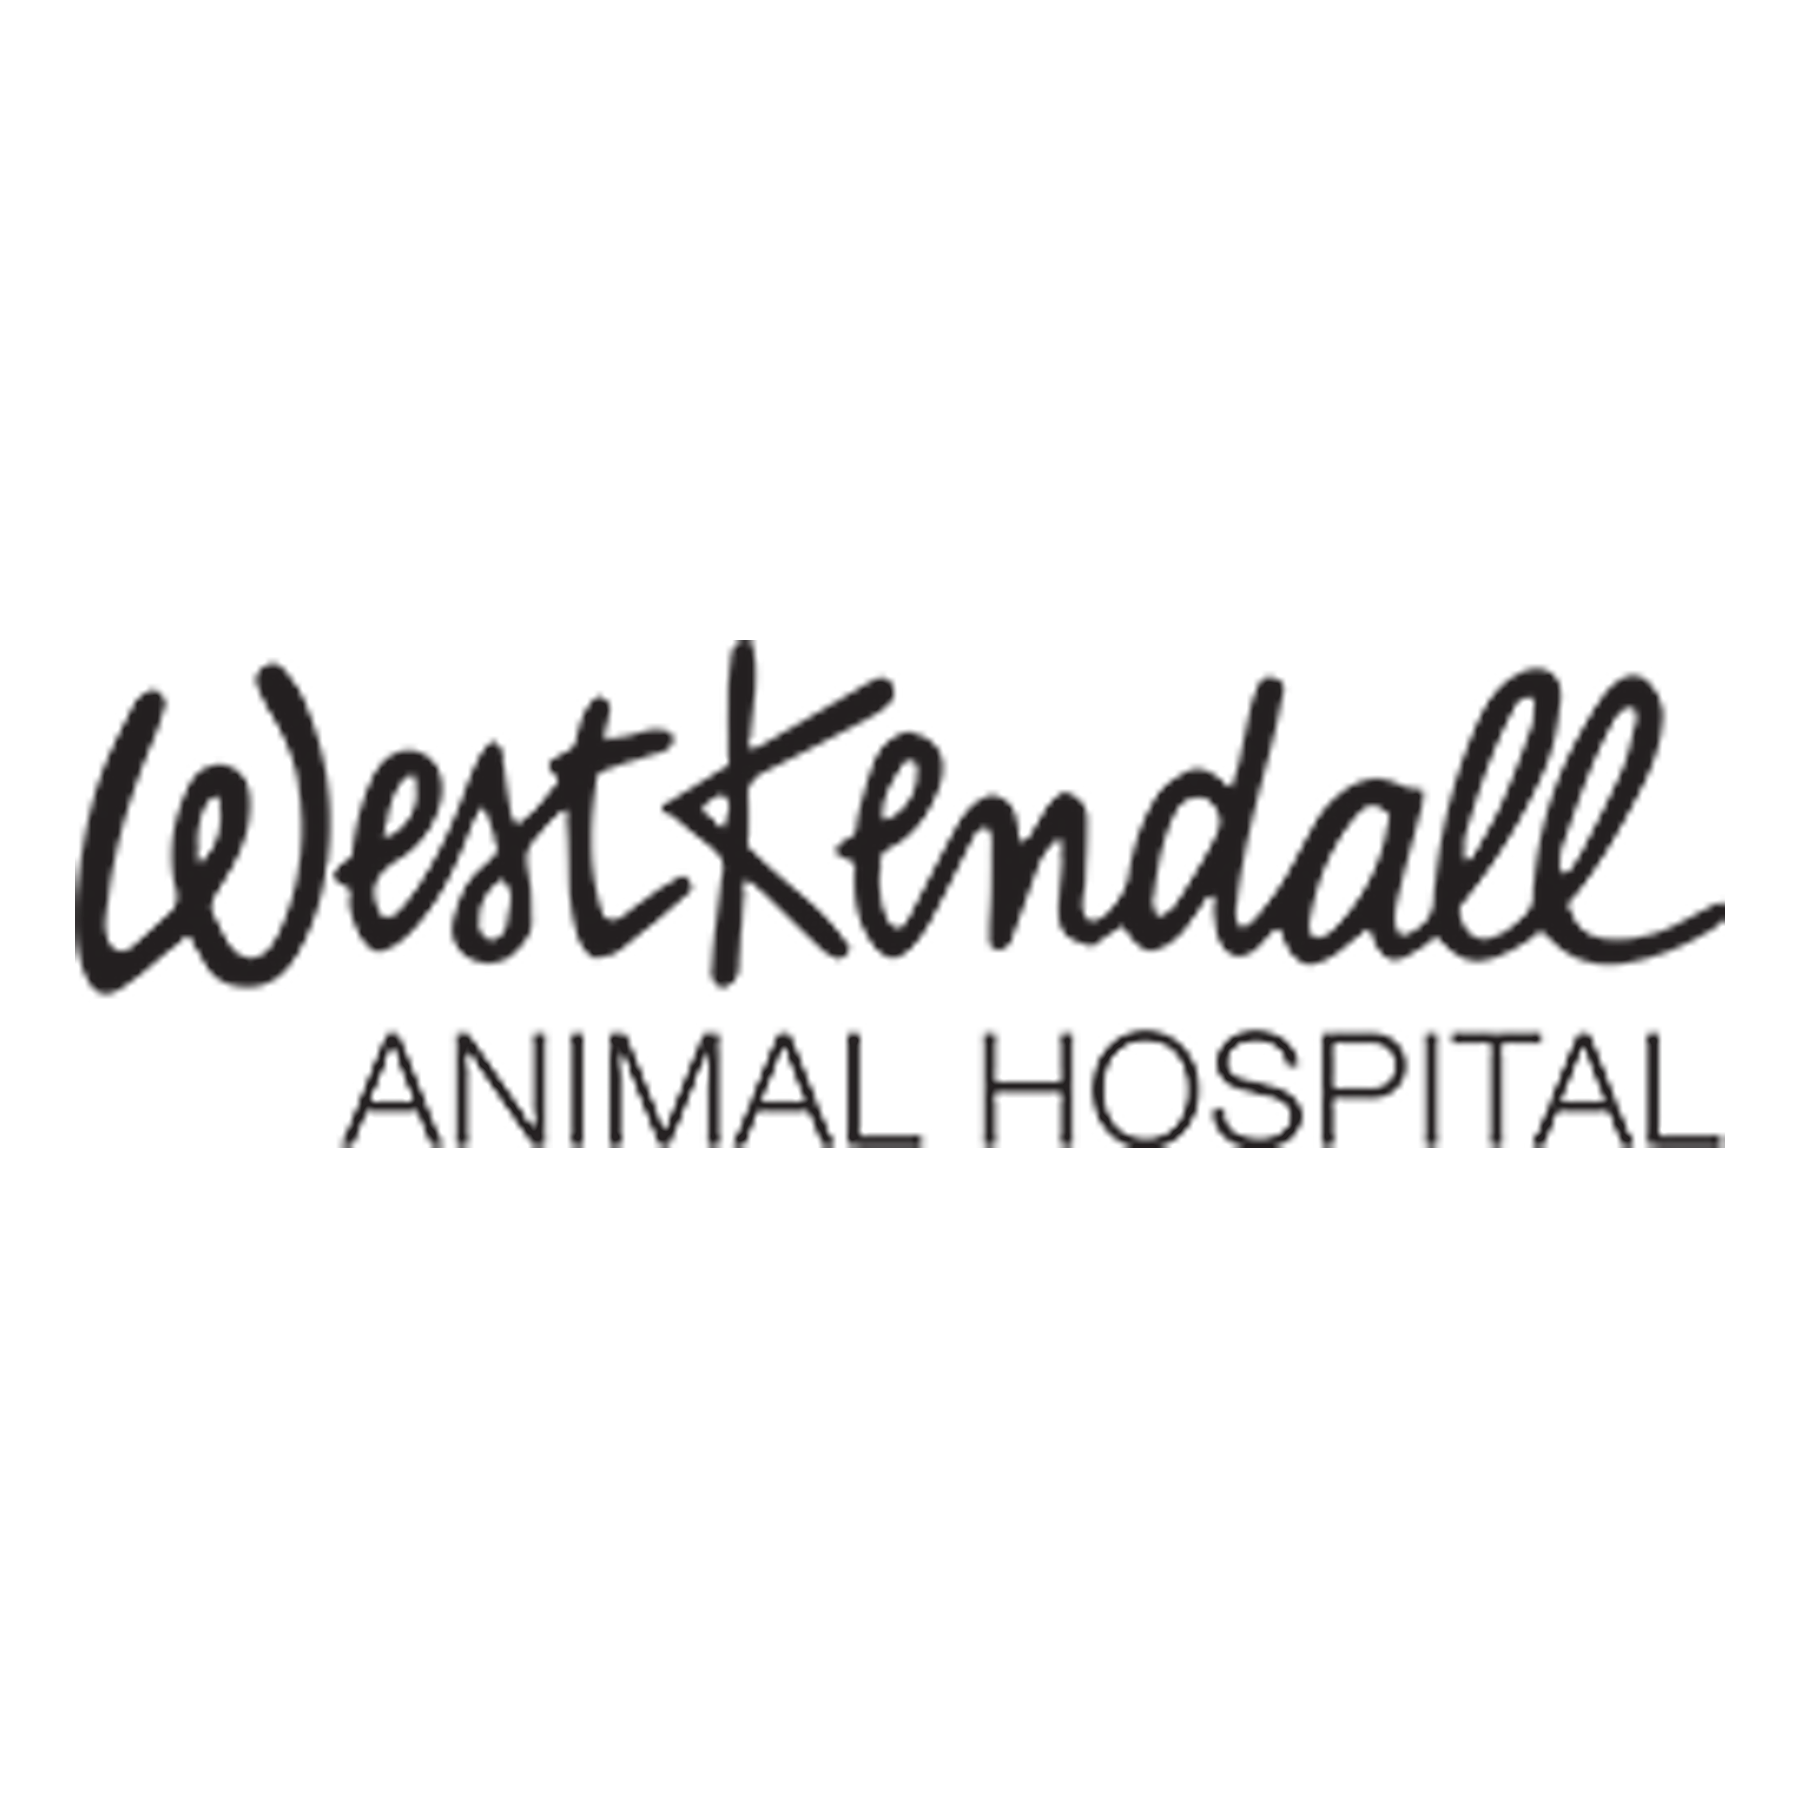 West Kendall Animal Hospital - Miami, FL 33196 - (305)385-0404 | ShowMeLocal.com